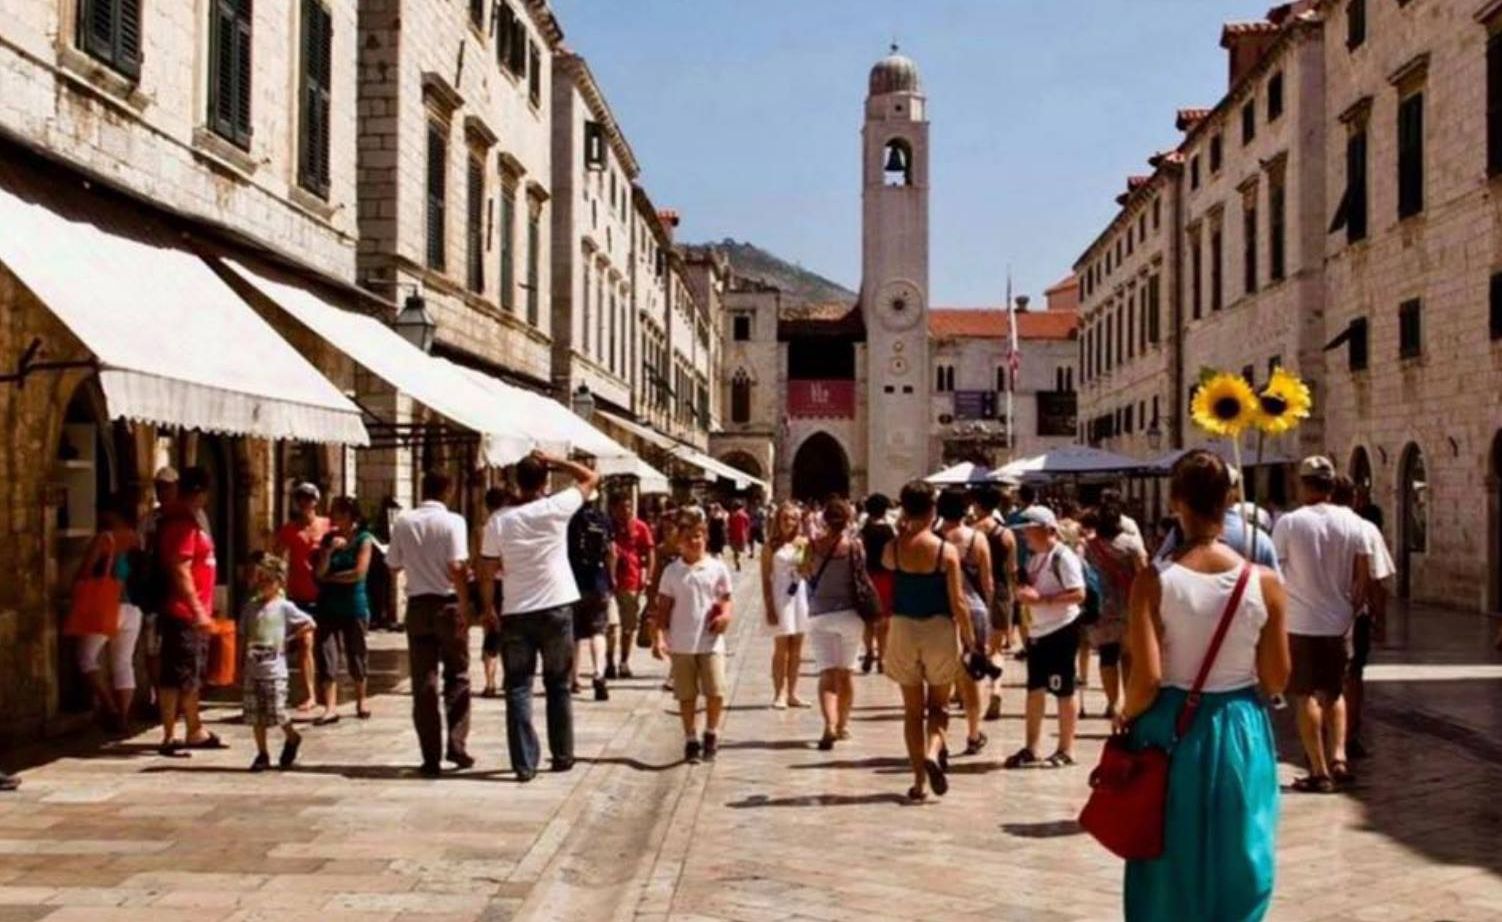 Main Street ( Stradun ) in Dubrovnik Old City in Croatia